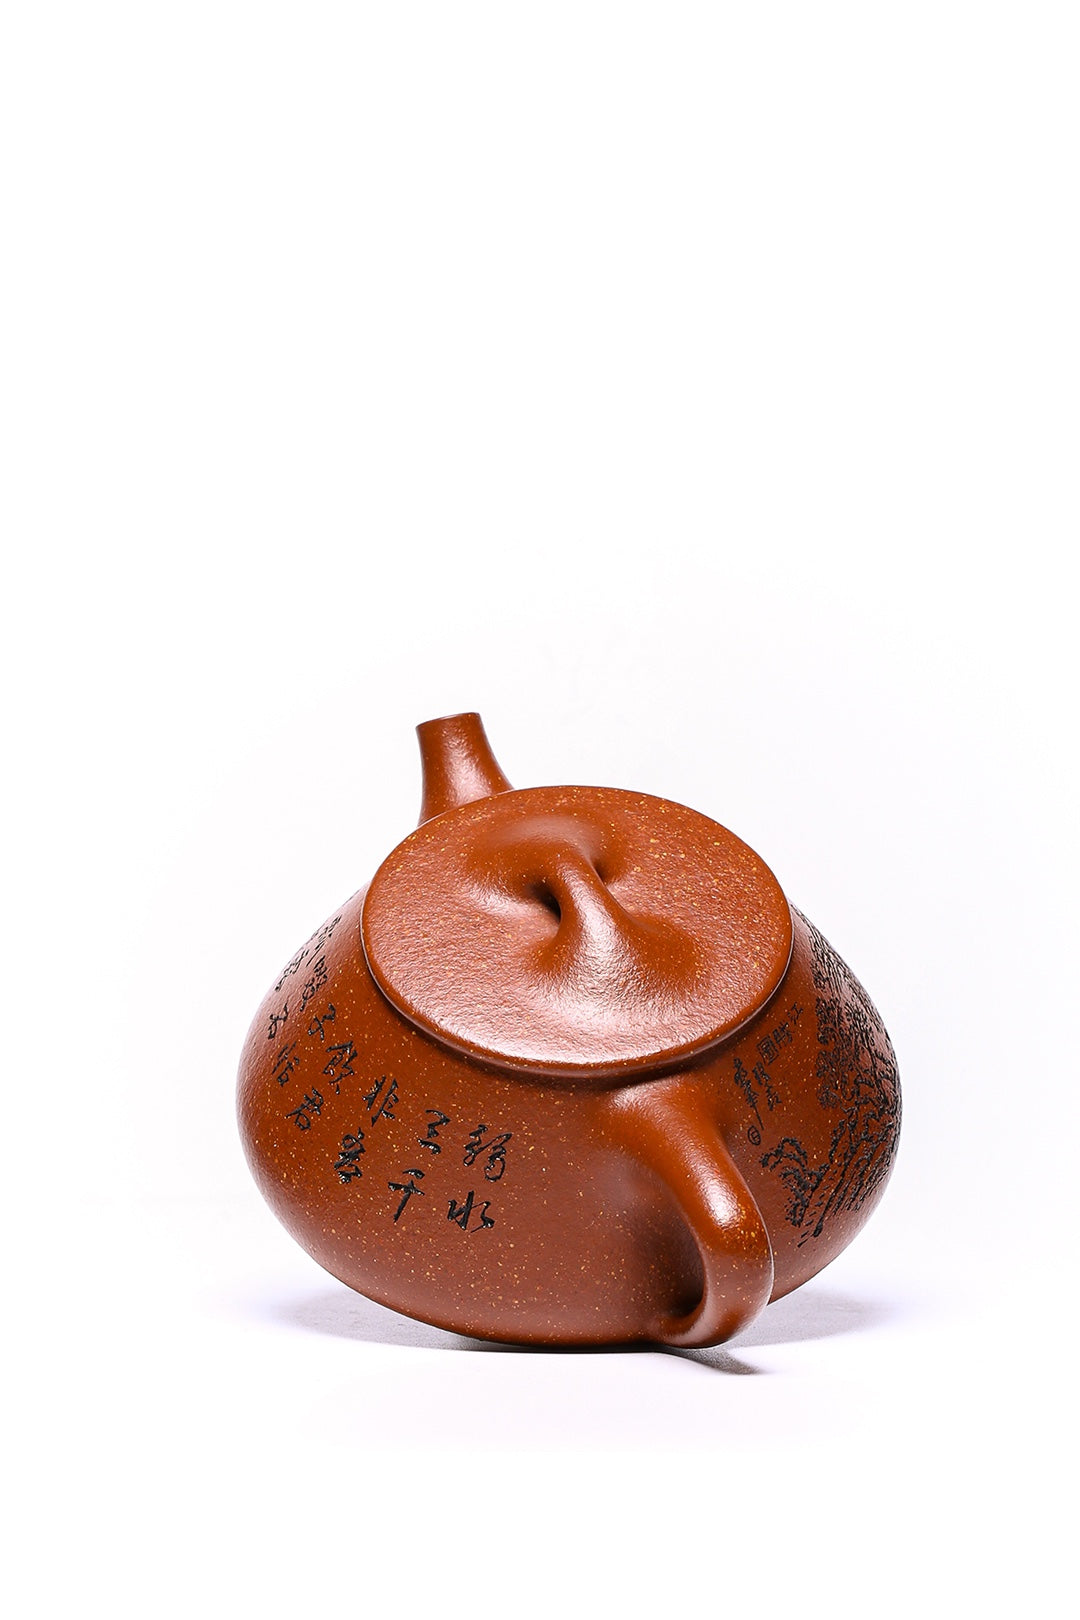 [Collection grade] Downhill material Jingzhou stone scoop Zisha teapot